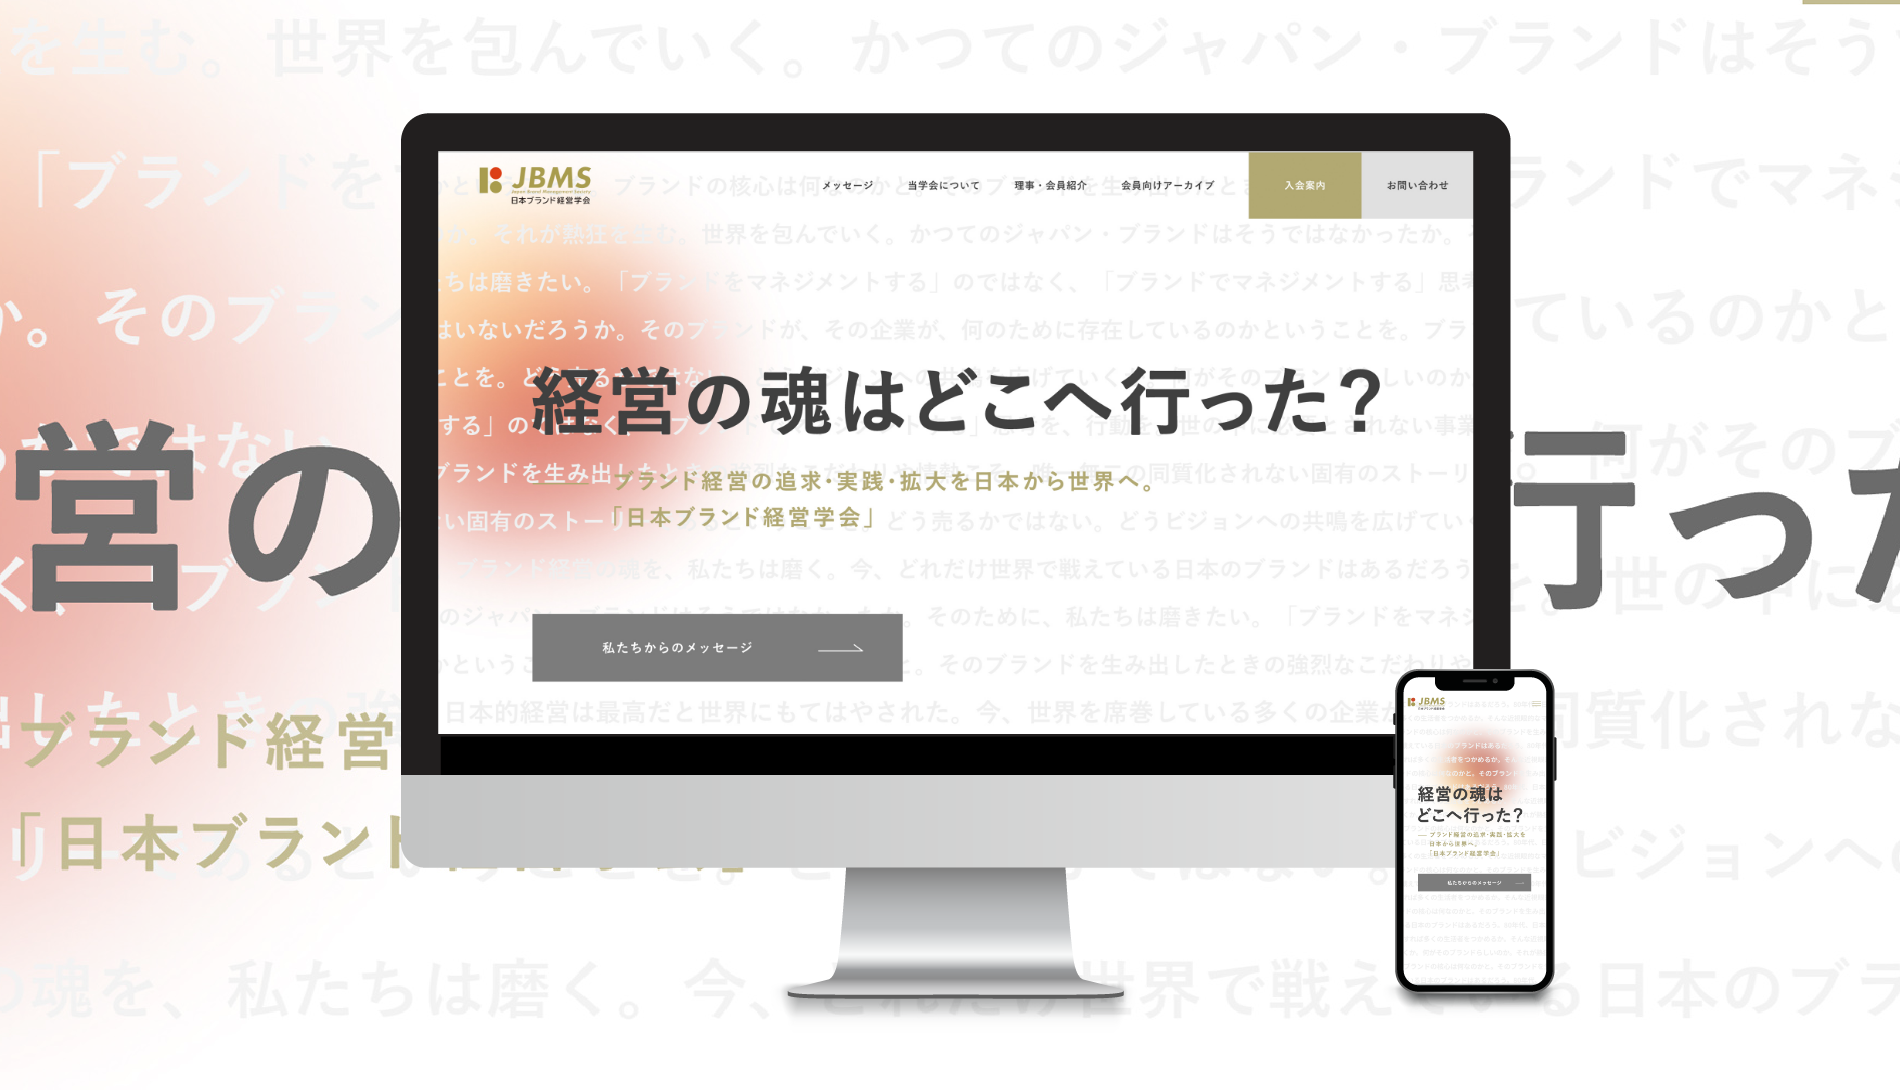 JAPAN BRAND MANAGEMENT SOCIETY Web